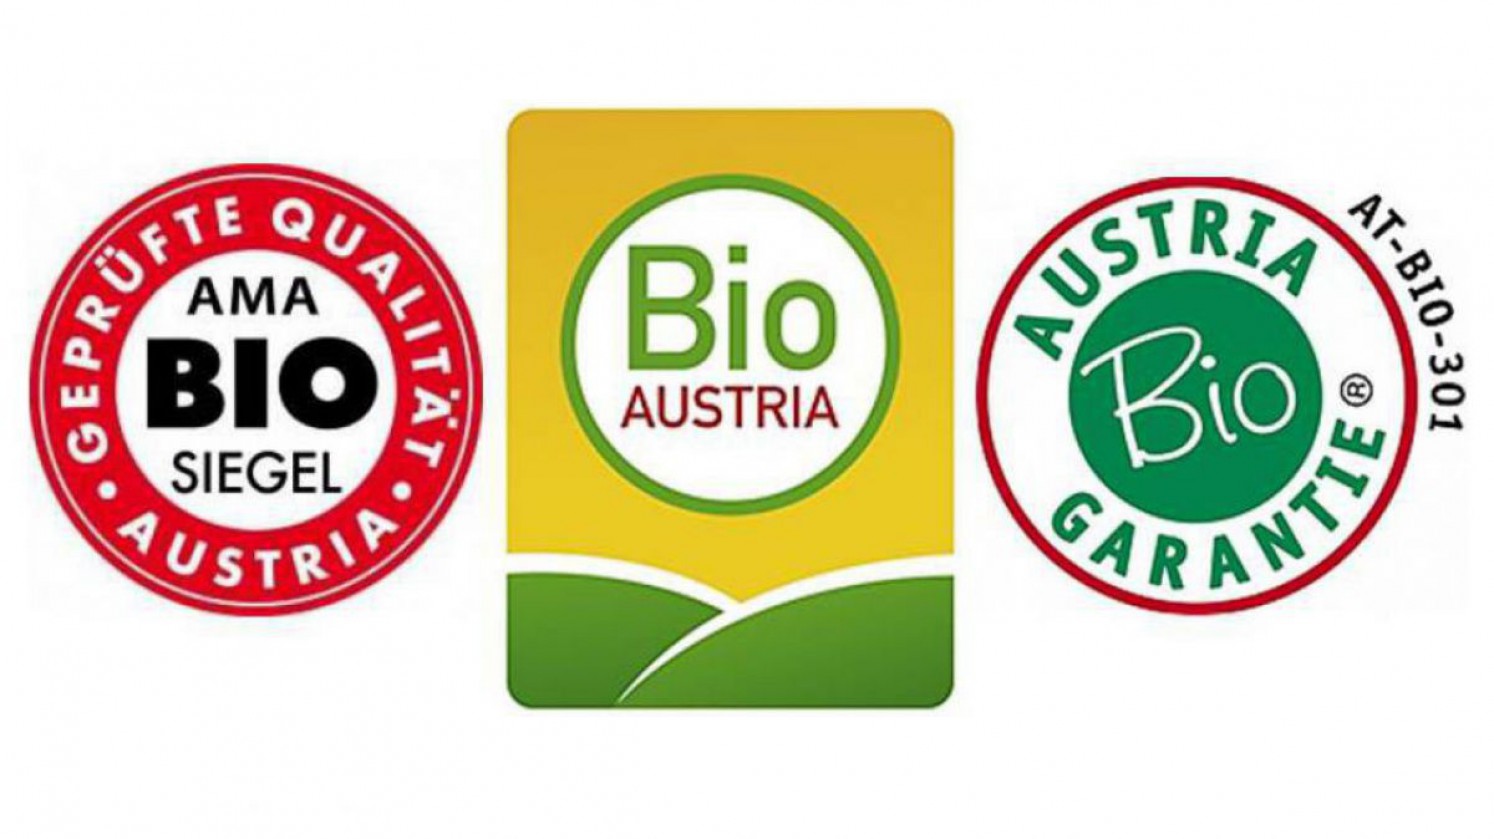 Ama Biosiegel, Bioaustria, Austria Biogarantie